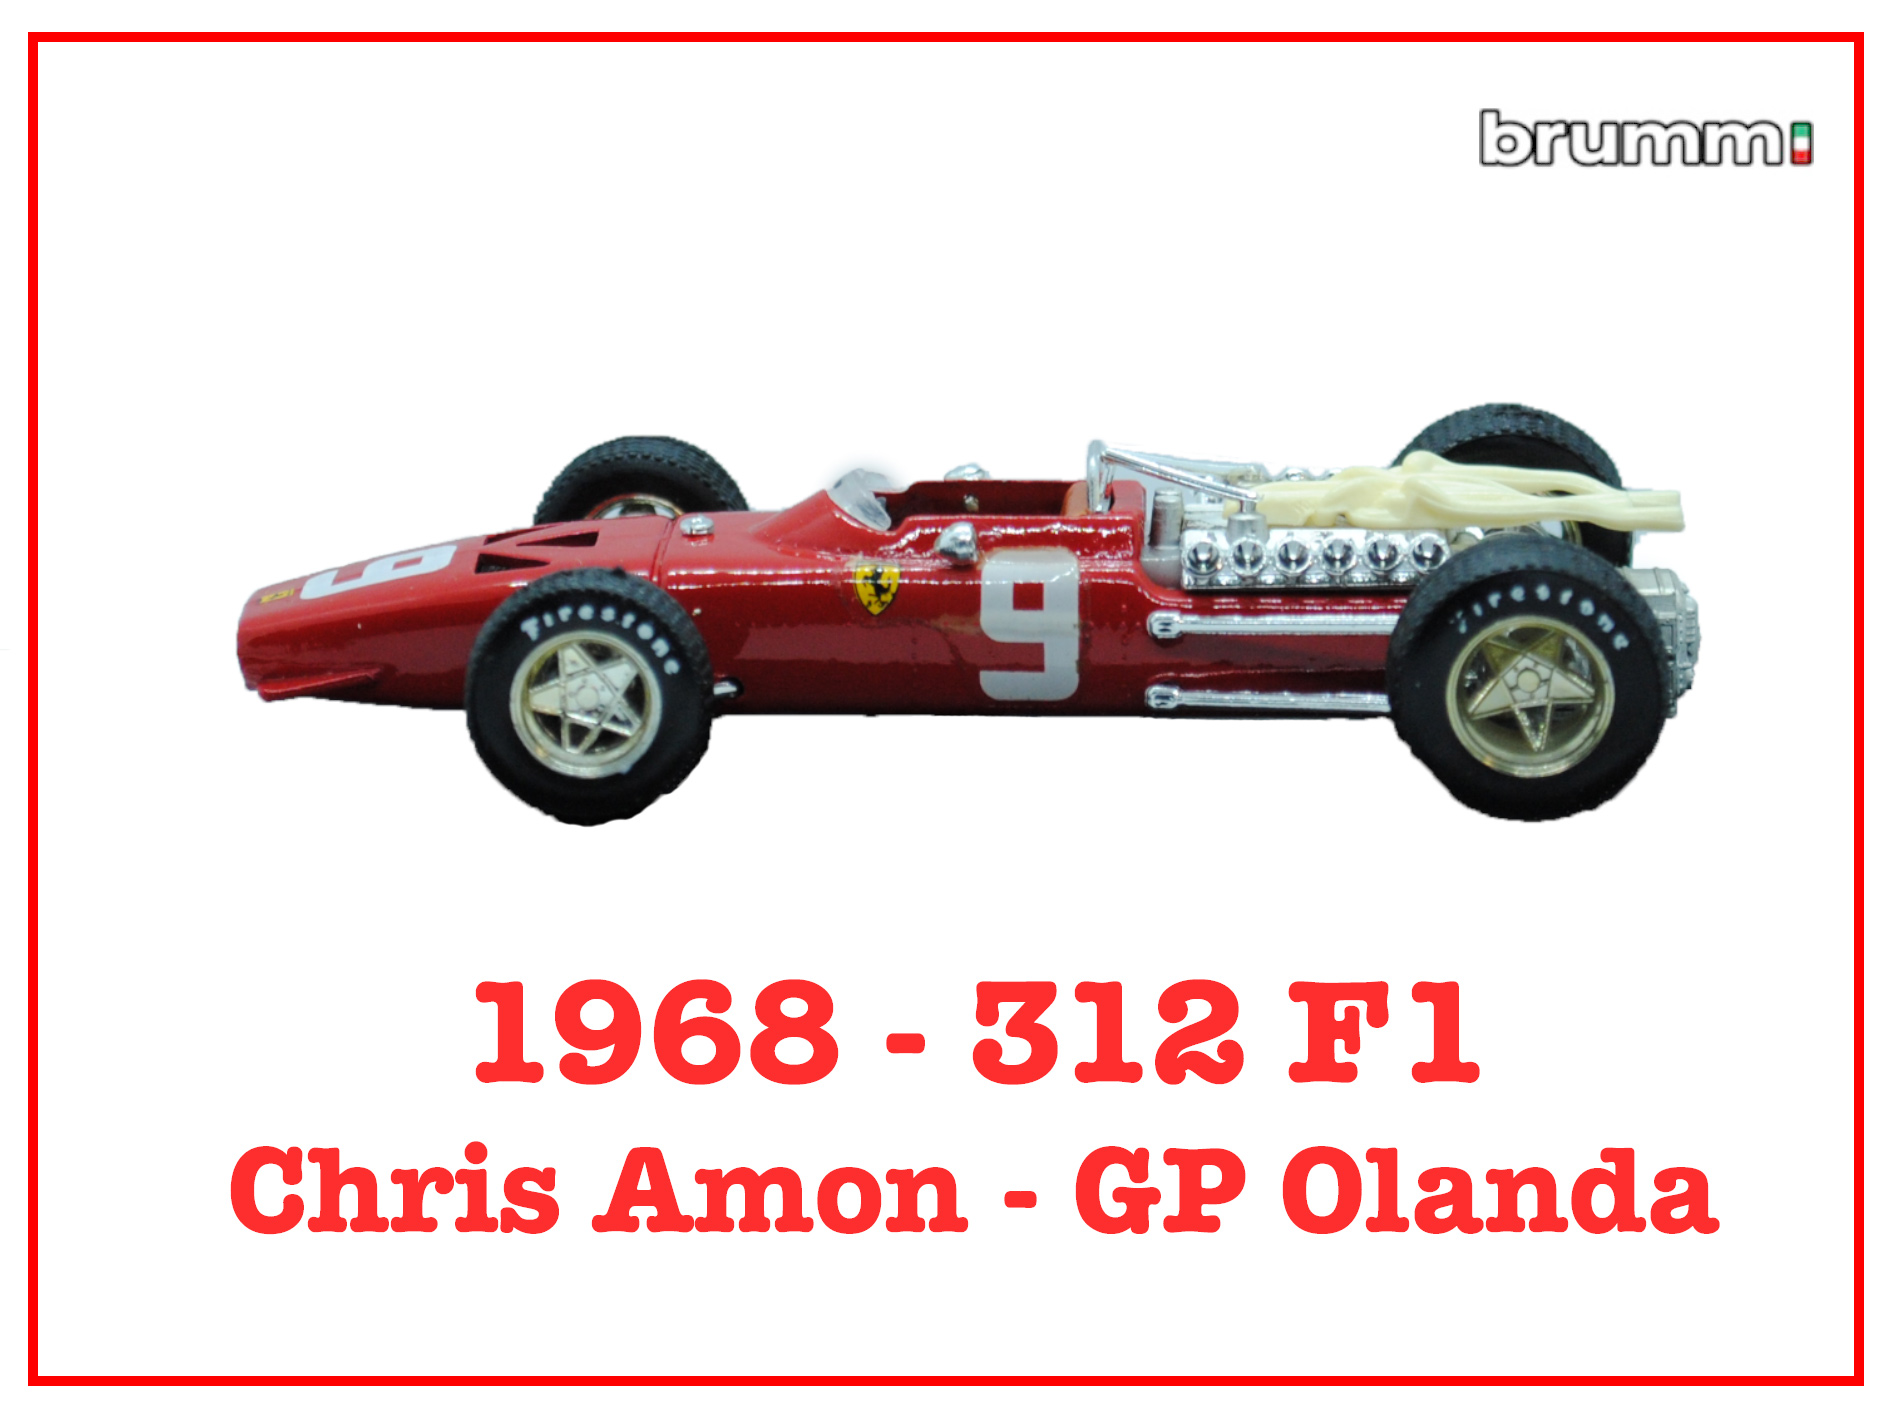 Immagine 312 F1 Chris Amon GP Olanda